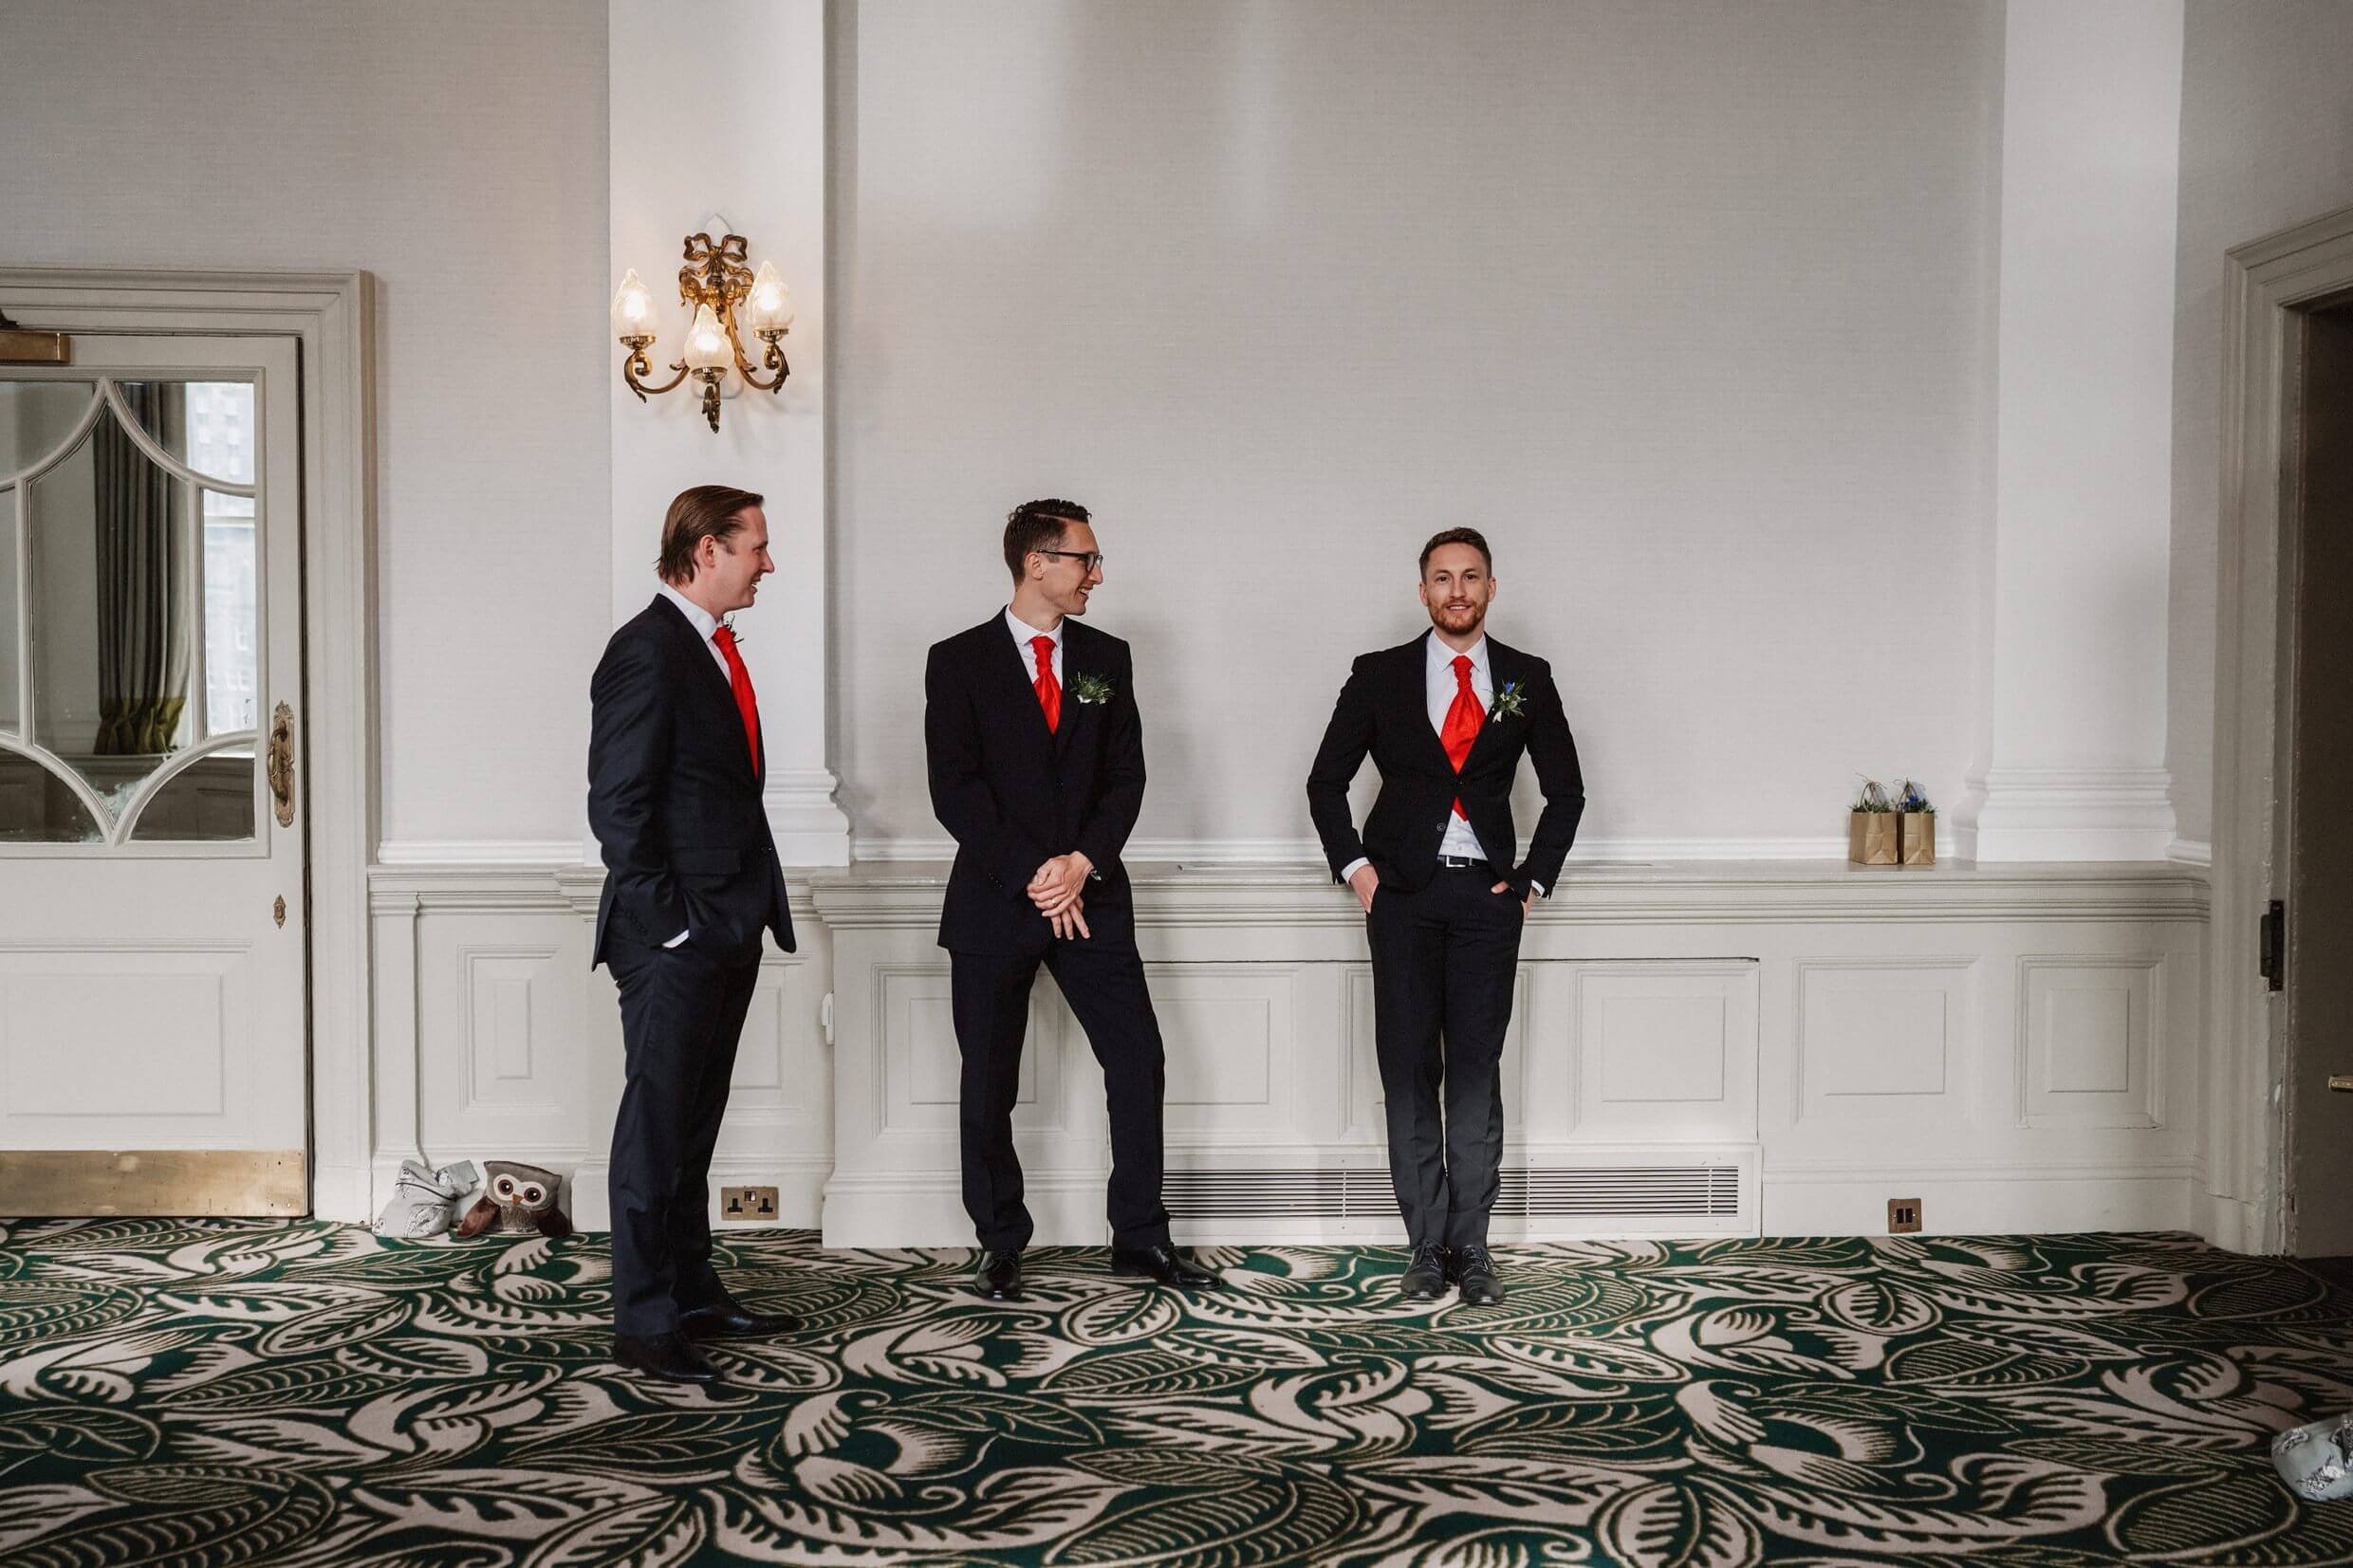 inside interior view of the balmoral hotel edinburgh wedding venue in scotland showing three groomsmen waiting before the ceremony begins